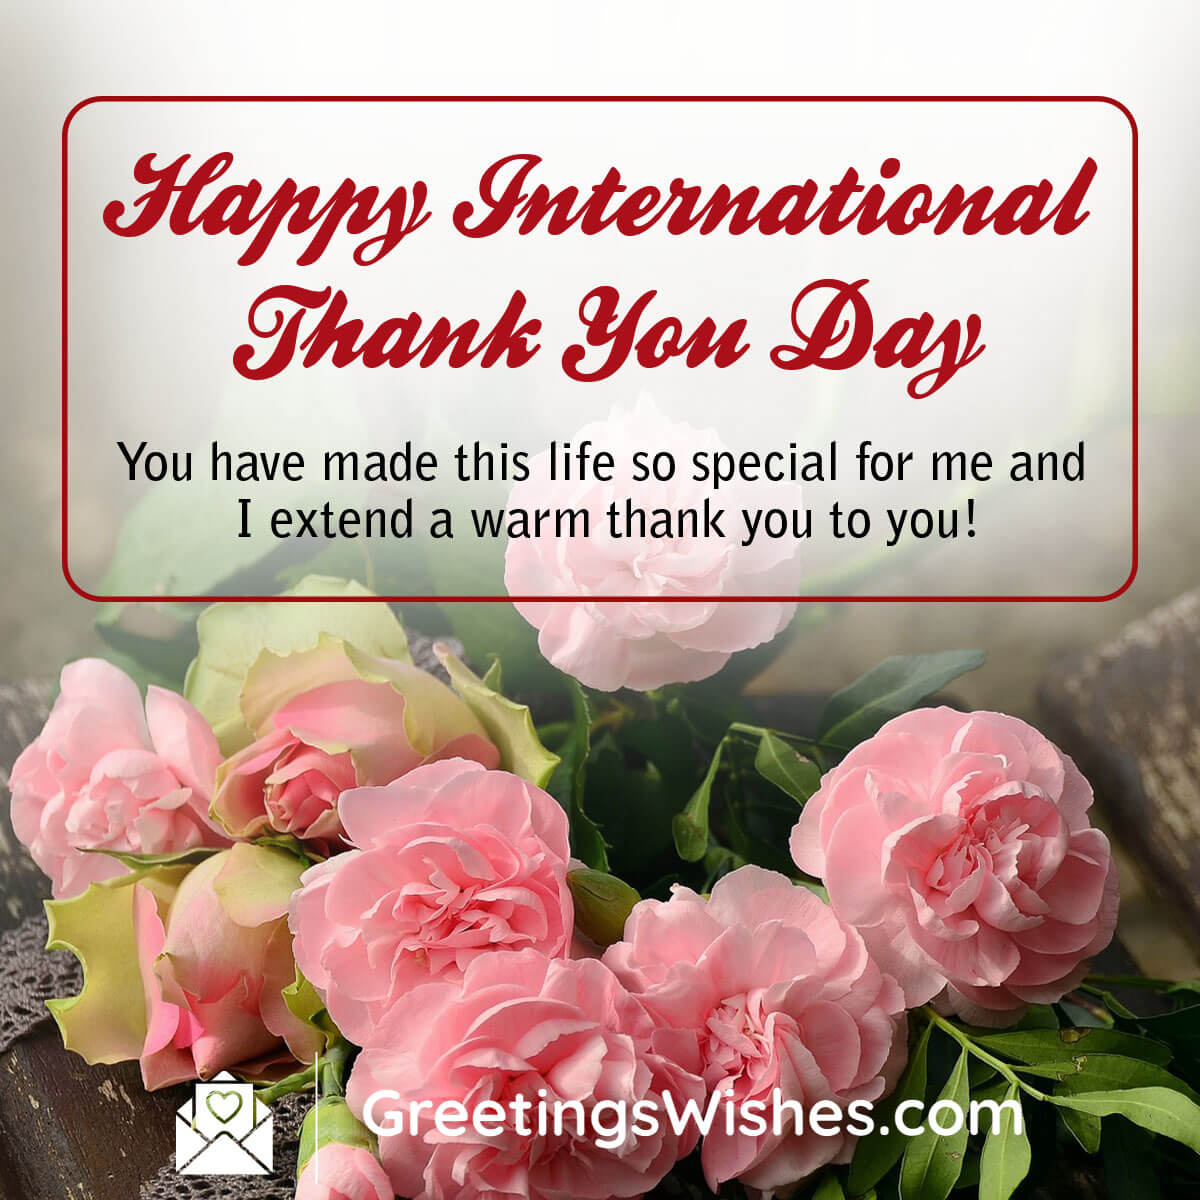 International Thank You Day Greetings (11 January)